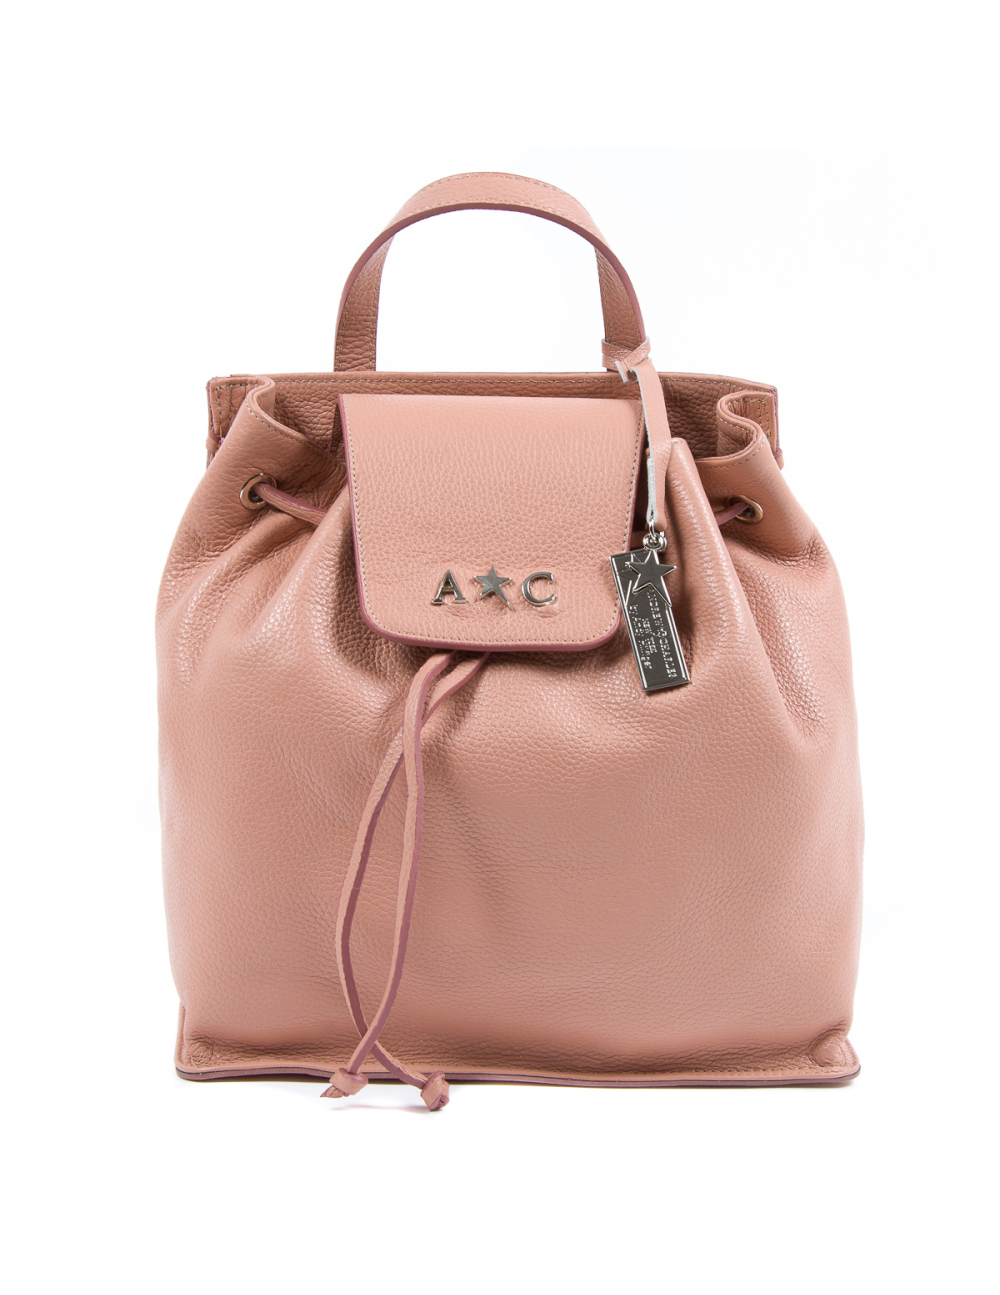 Andrew Charles Womens Handbag Pink KYLE - YuppyCollections